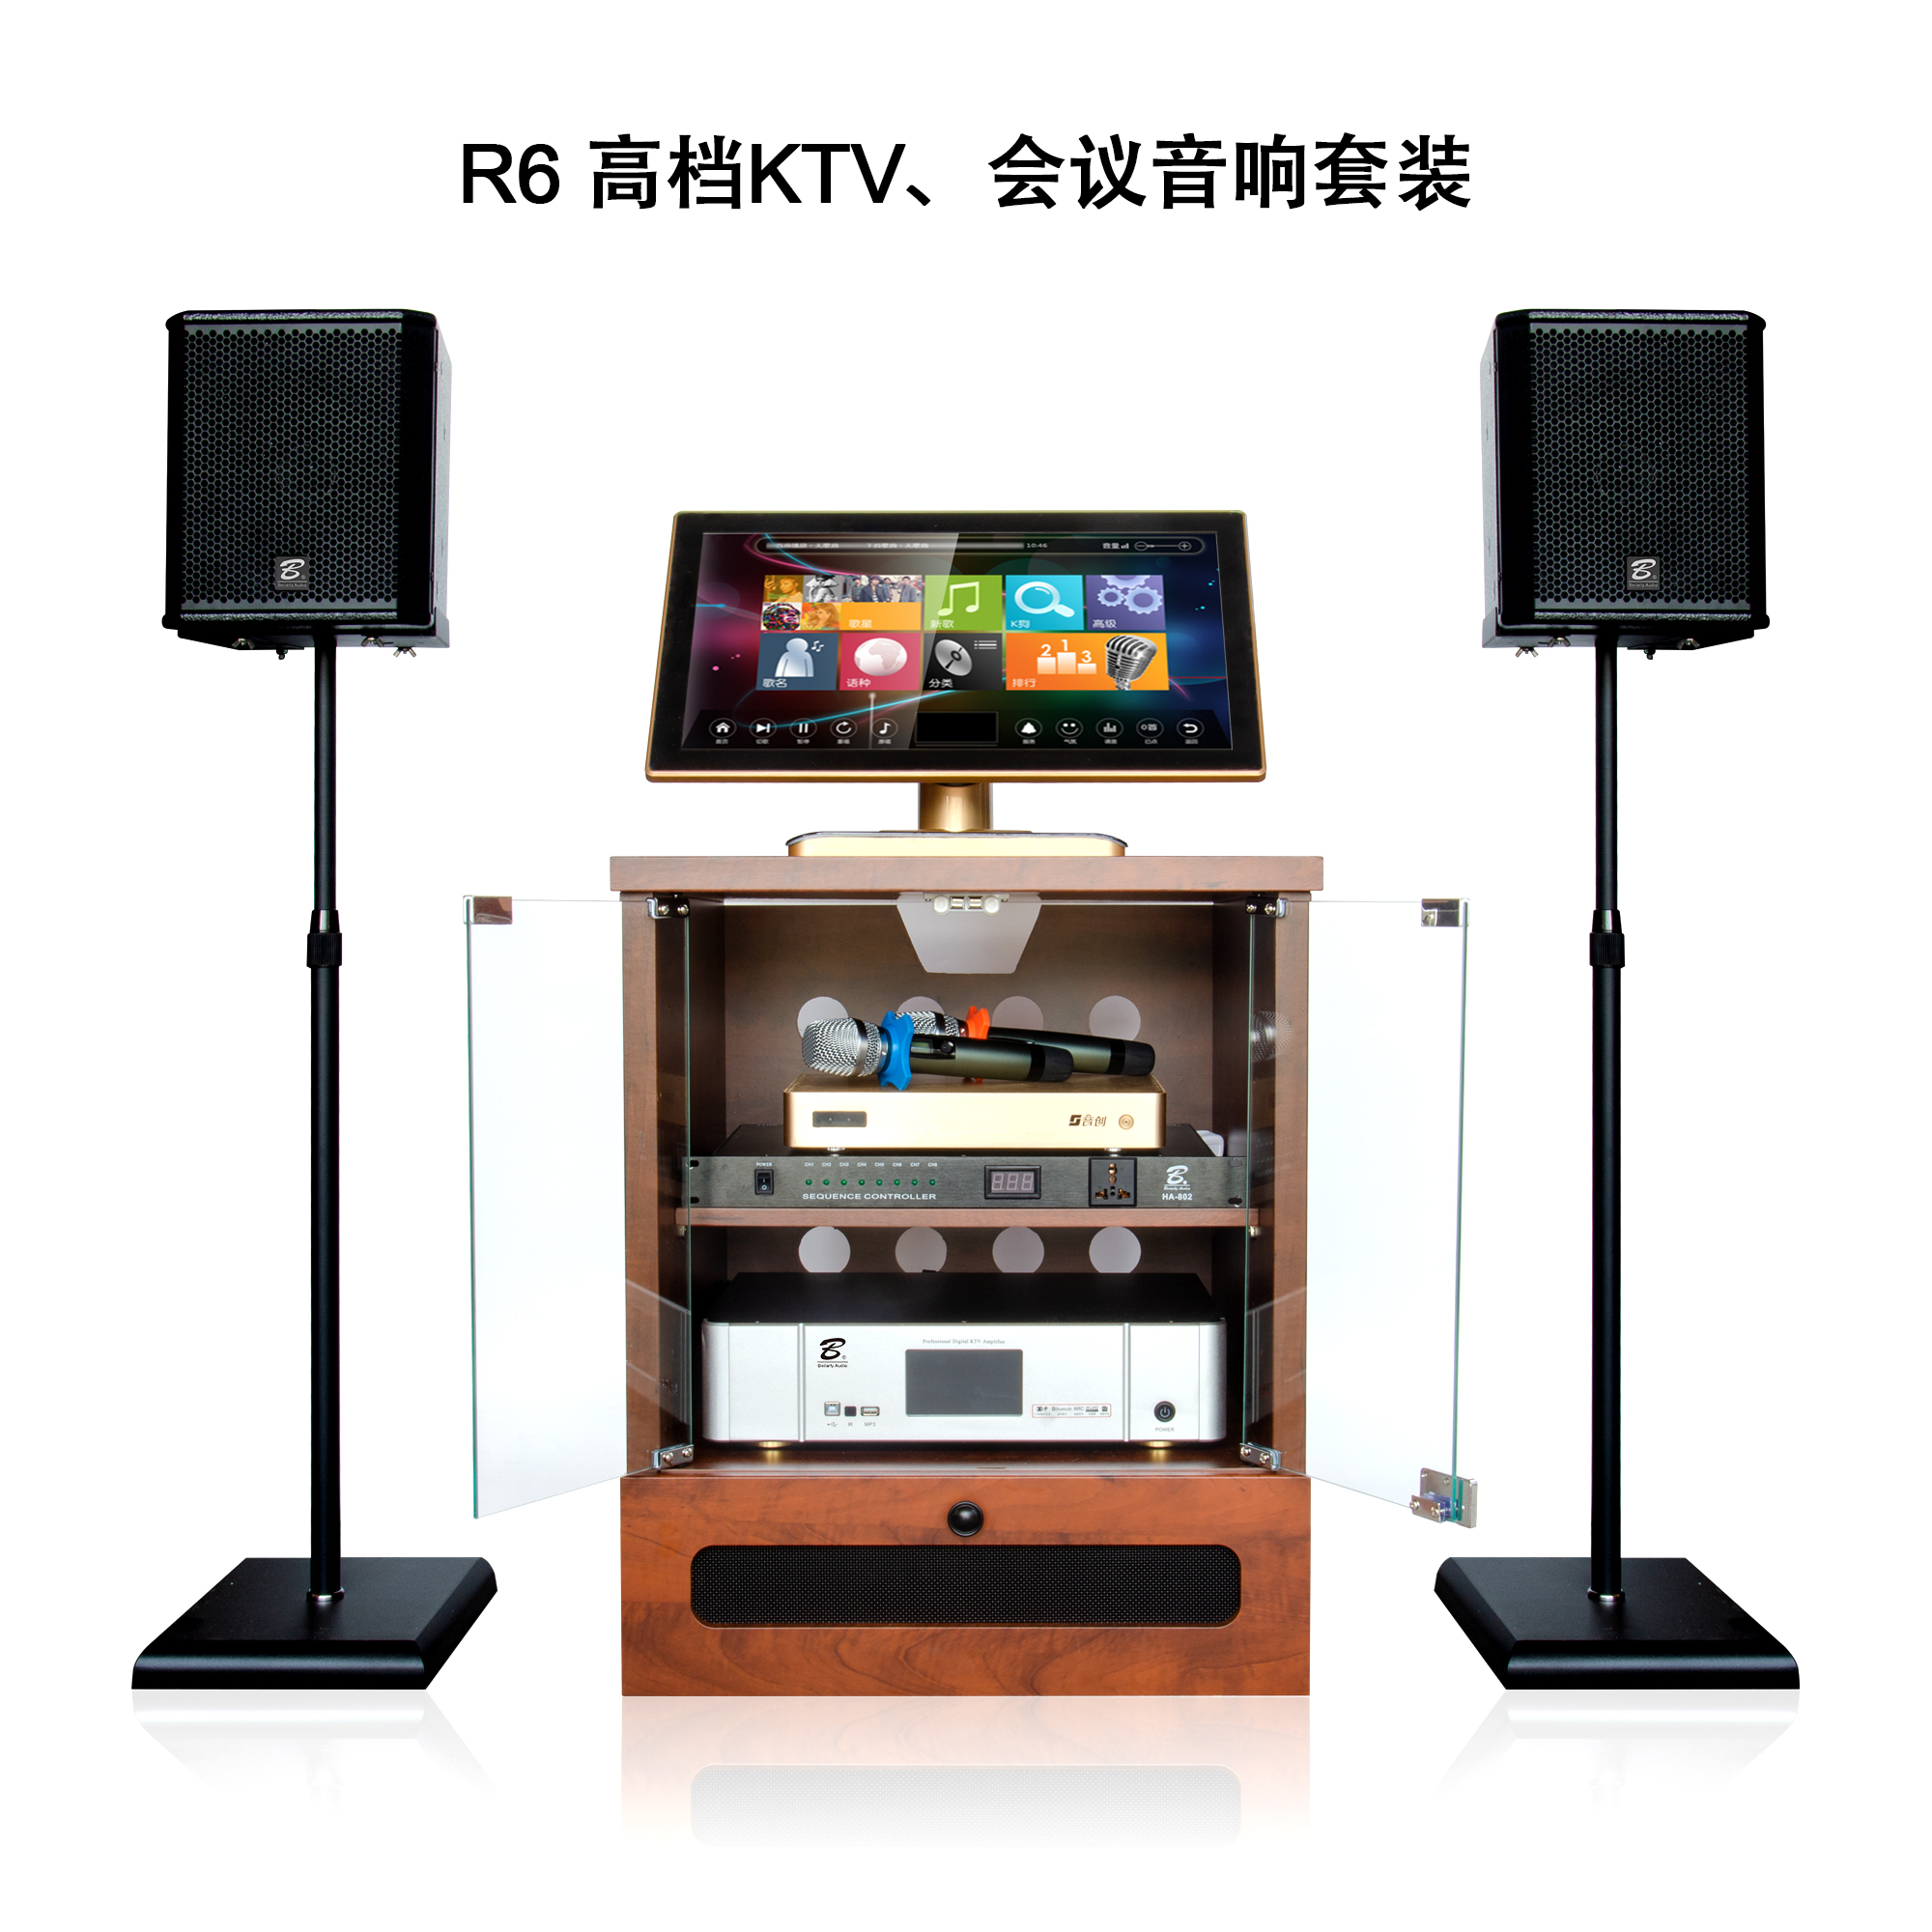 R6 KTV professional audio set